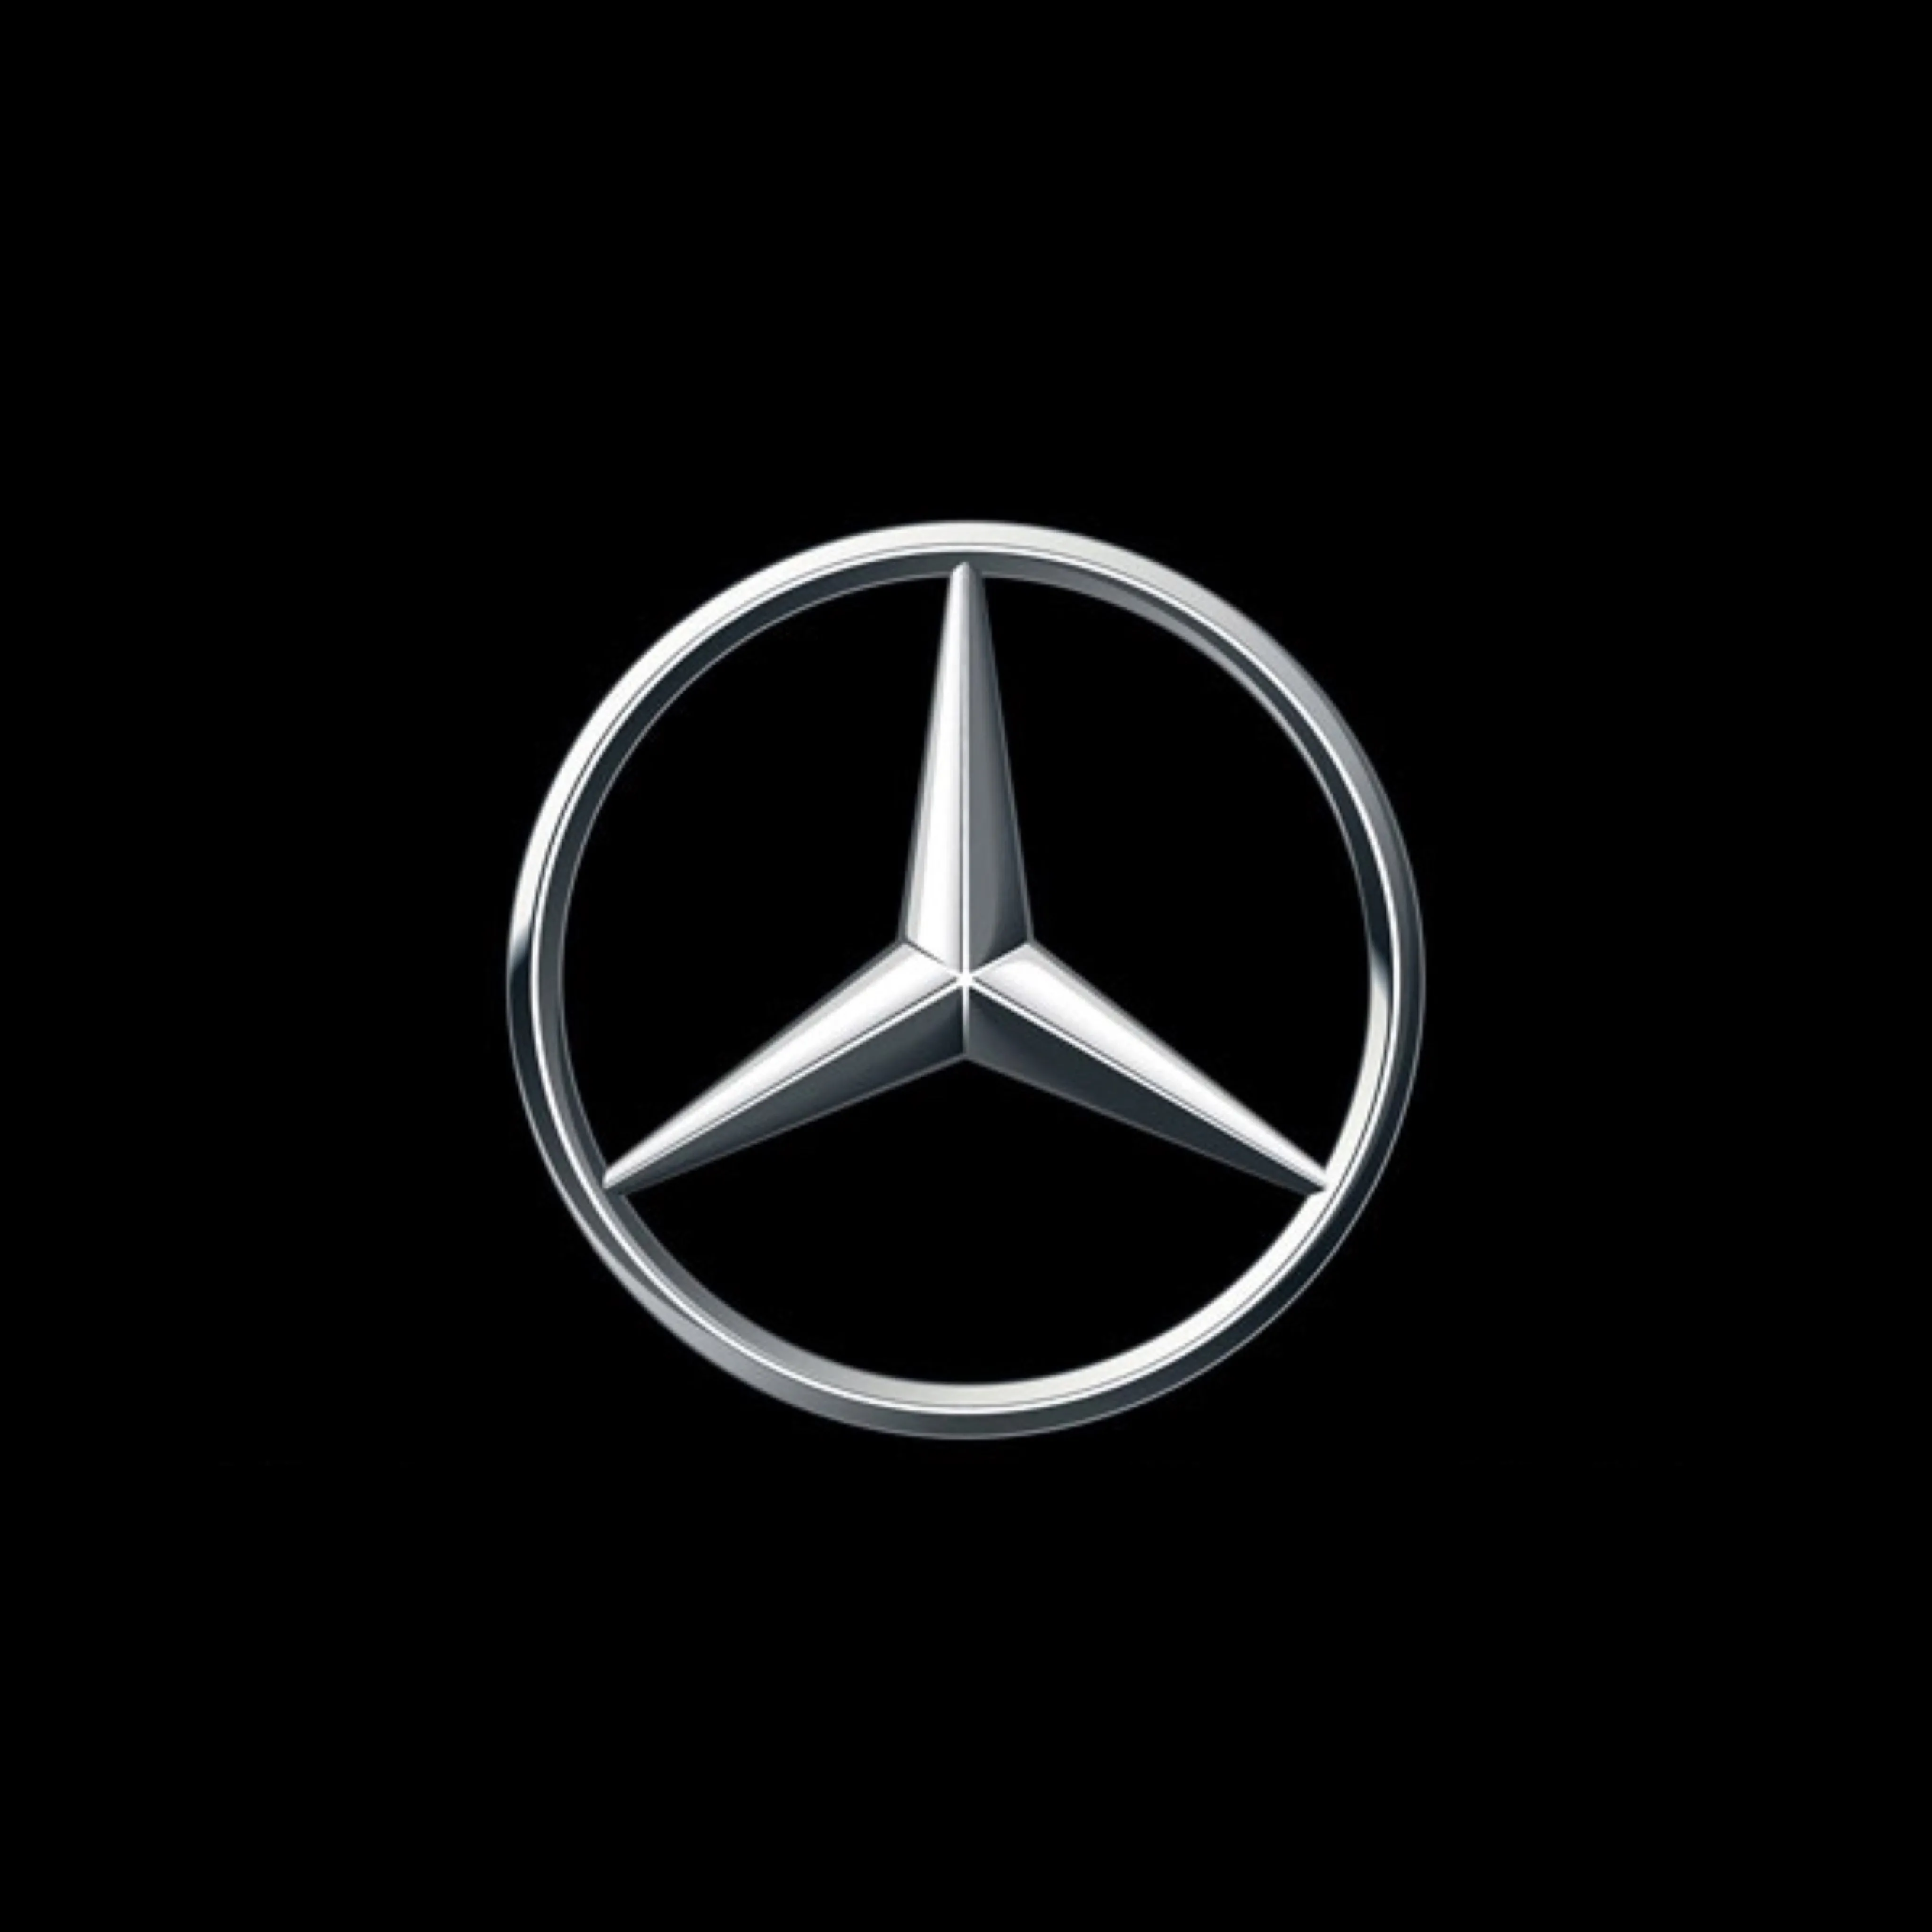 Careers | Mercedes-Benz USA